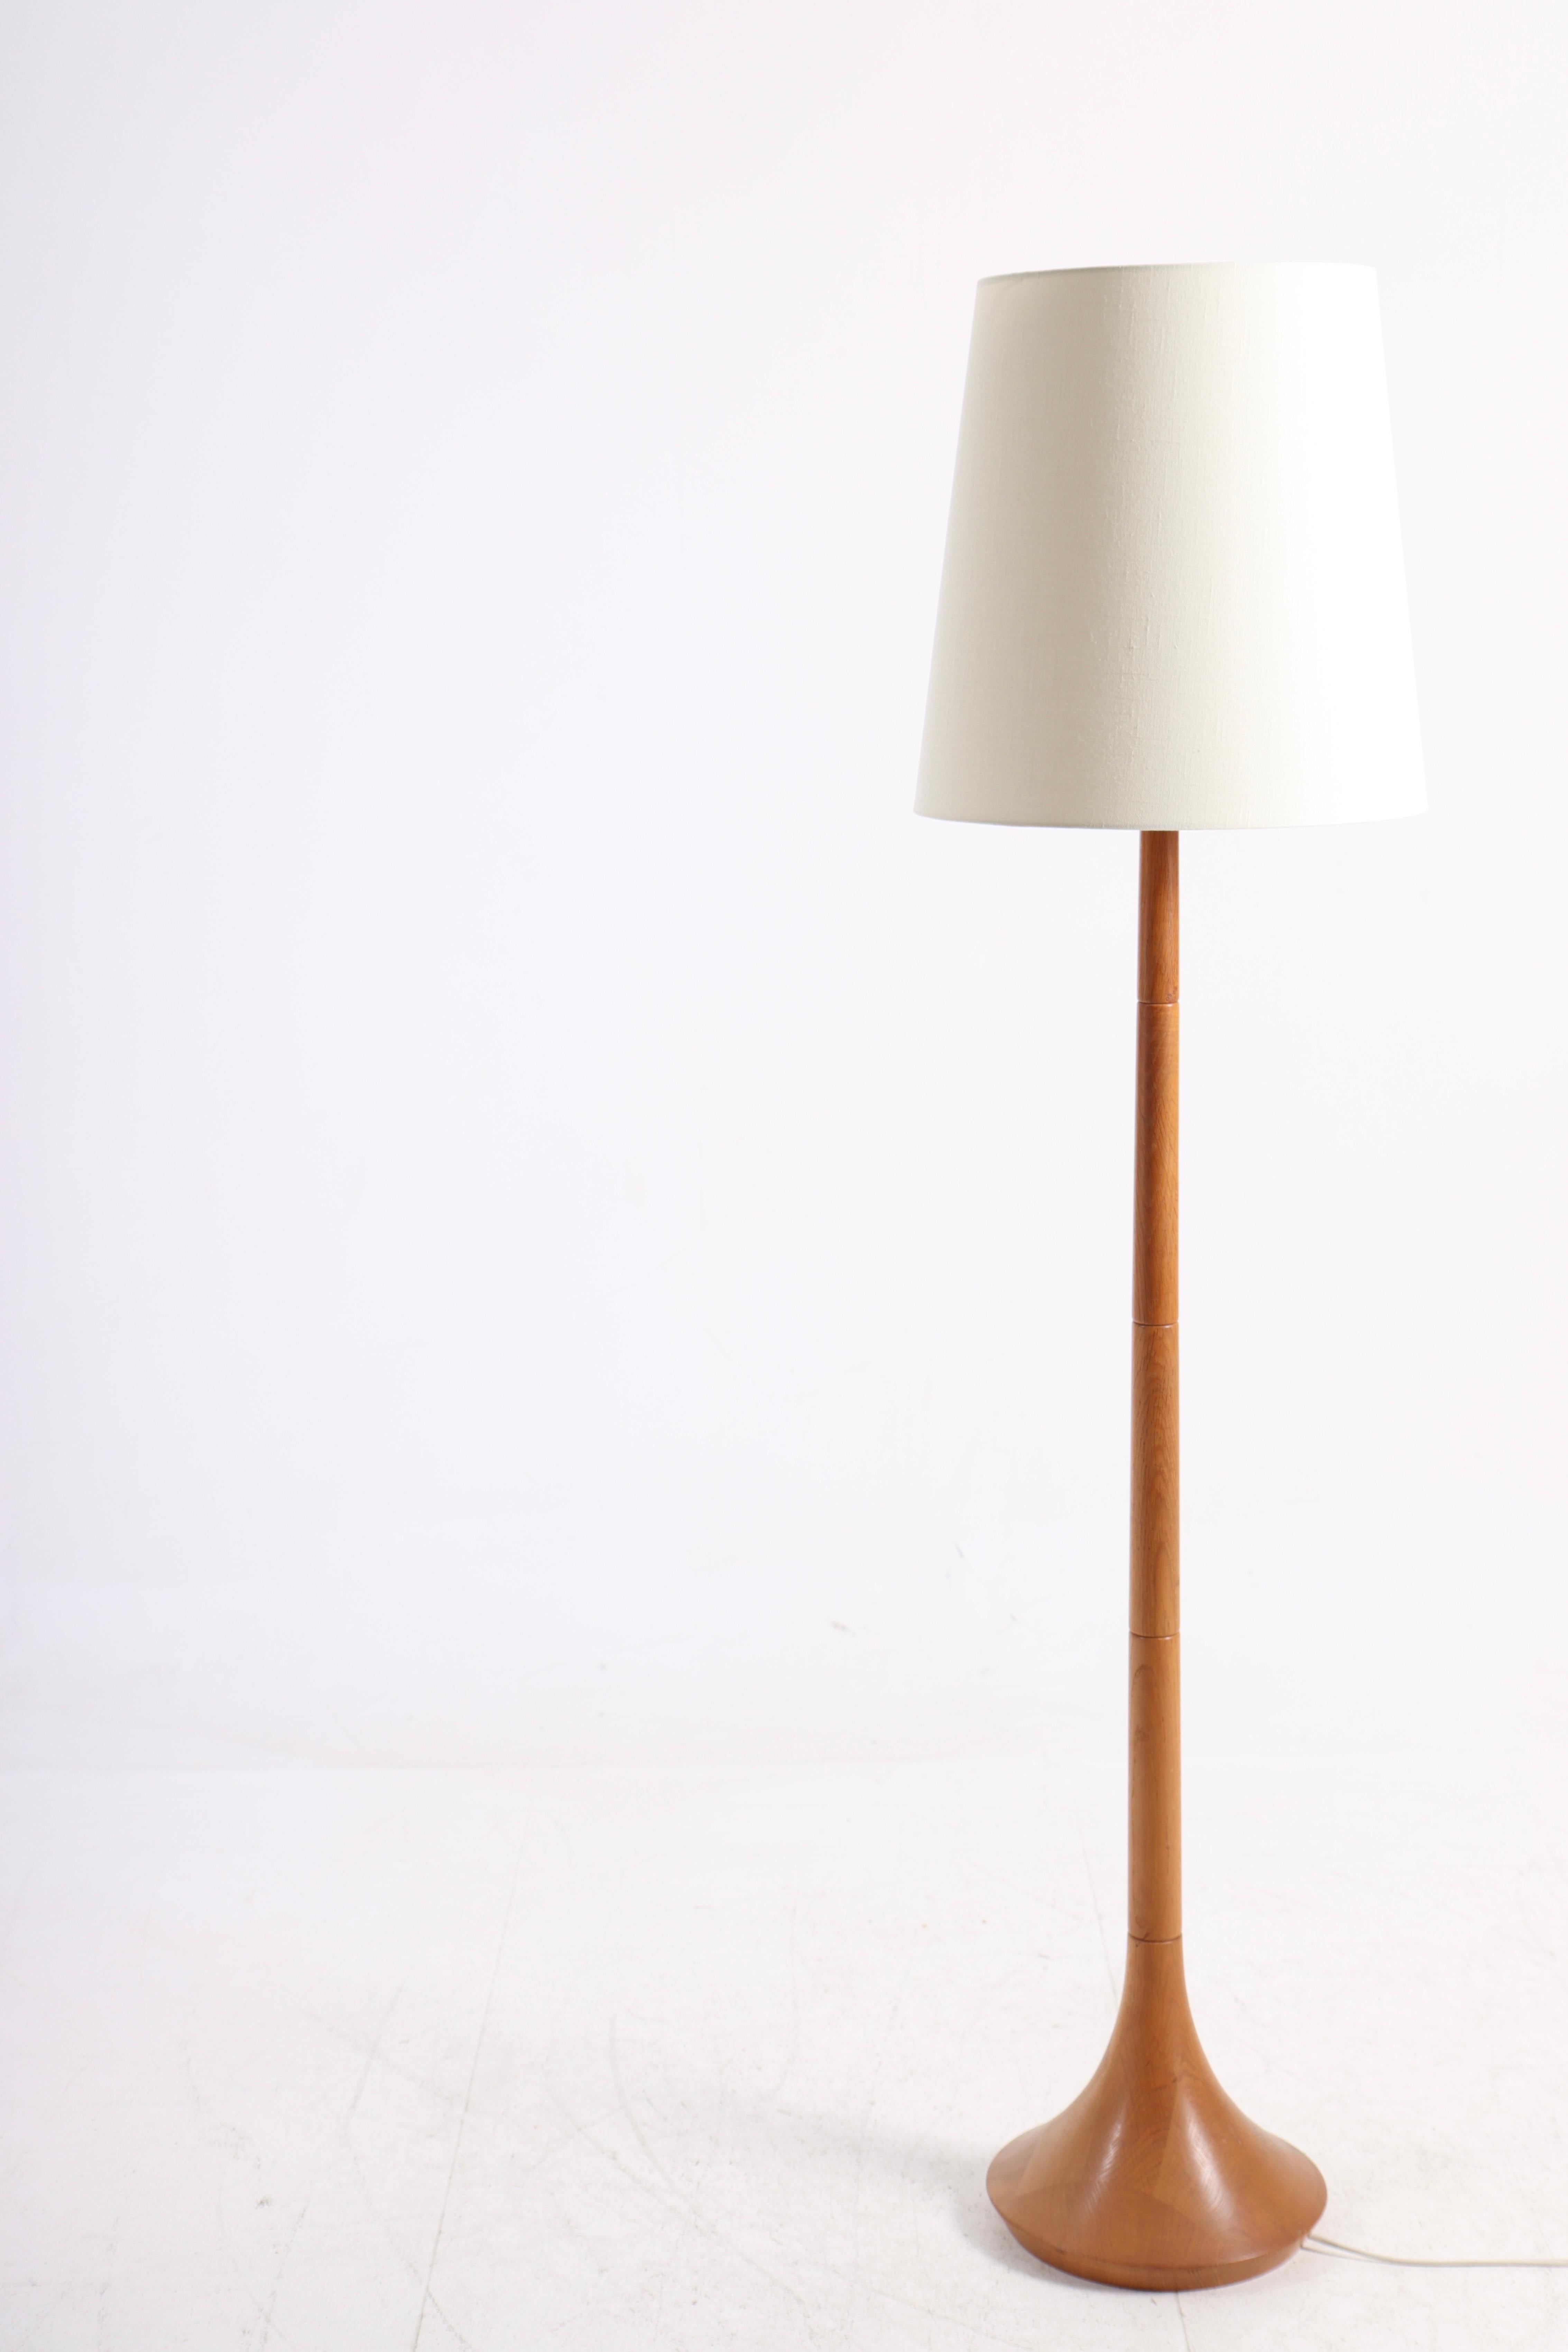 Danish Modern Midcentury Floor Lamp in Oak, Danish Design, 1950s For Sale 2